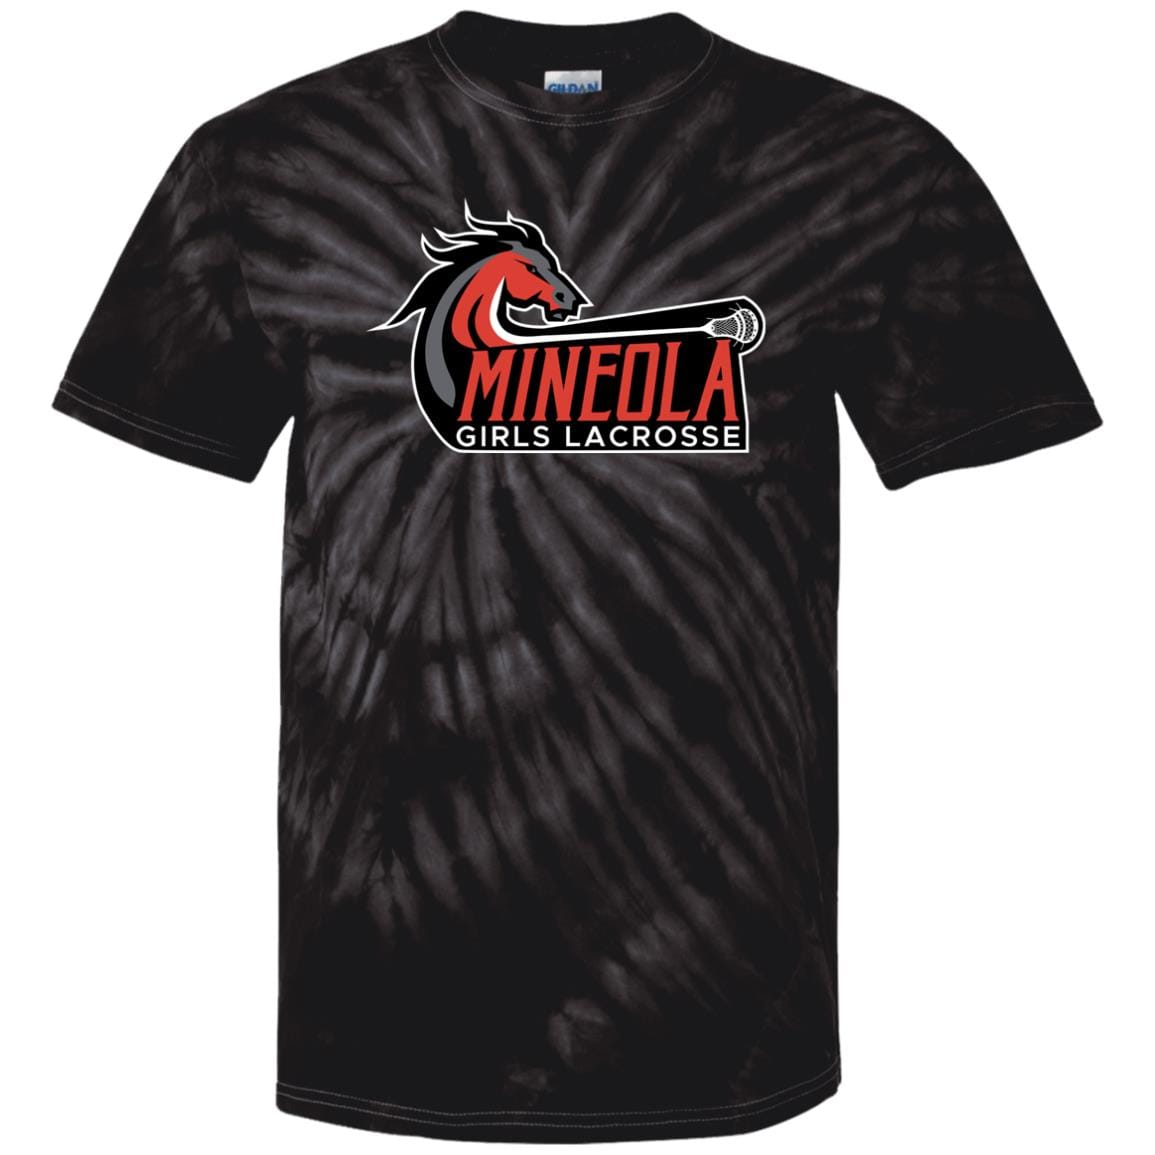 Mineola Girls Lacrosse Adult Cotton Tie Dye T-Shirt Signature Lacrosse